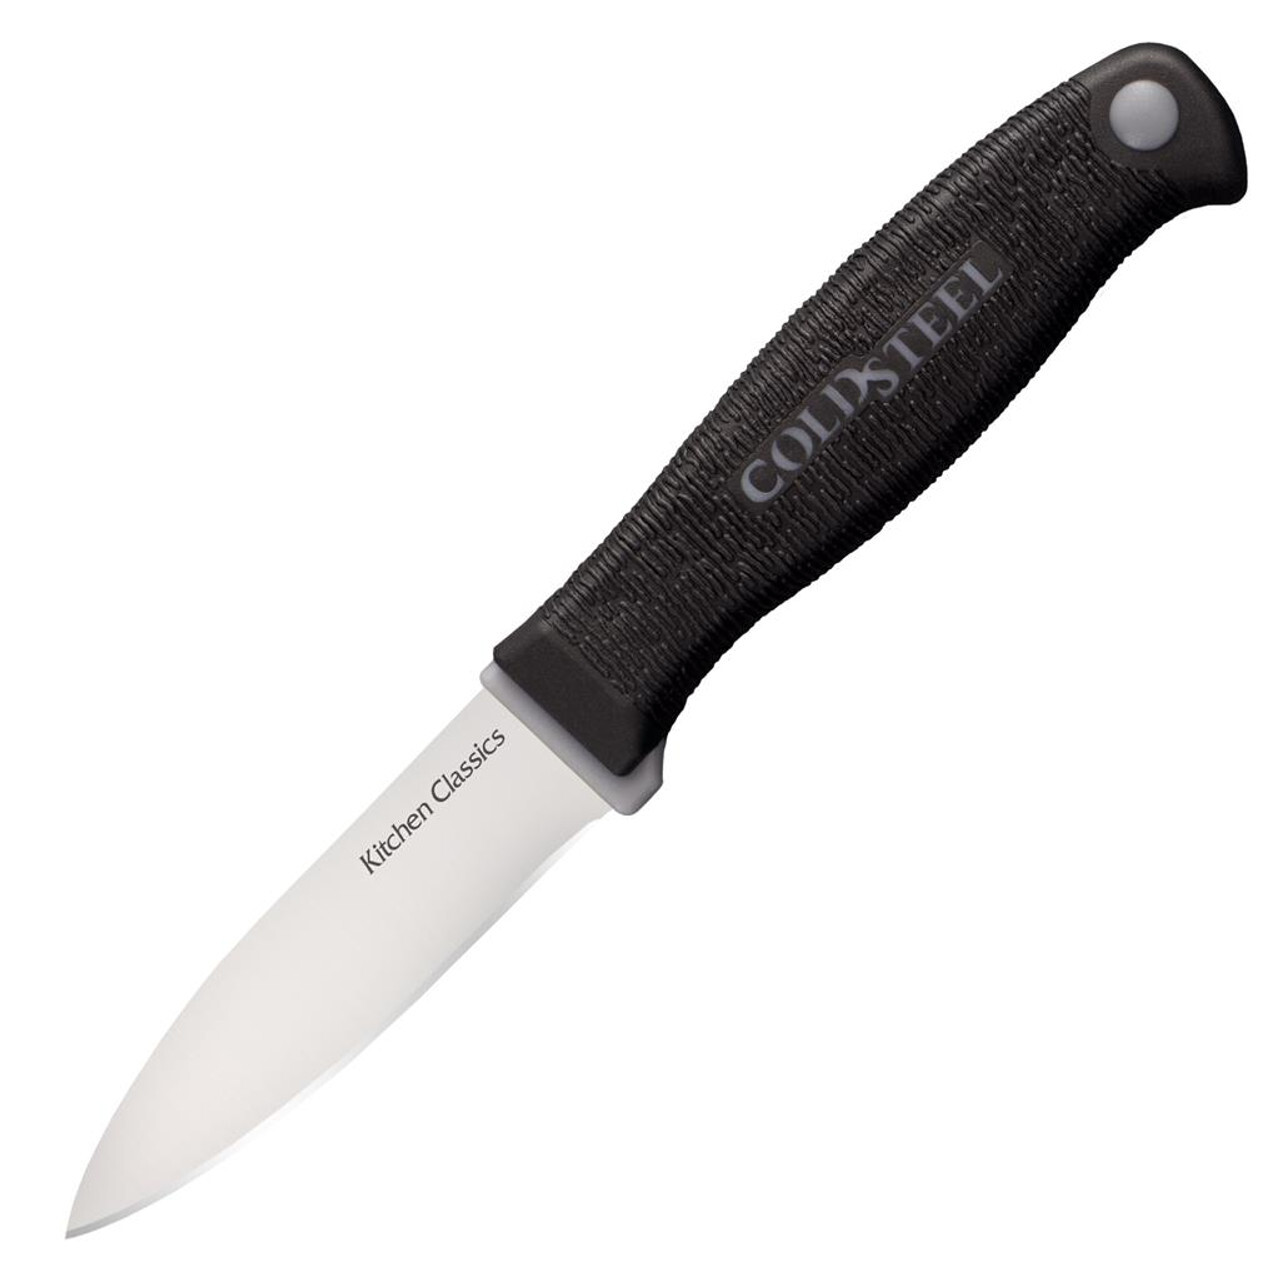 Нож овощной Paring knife (Kitchen Classics), 7.5 см